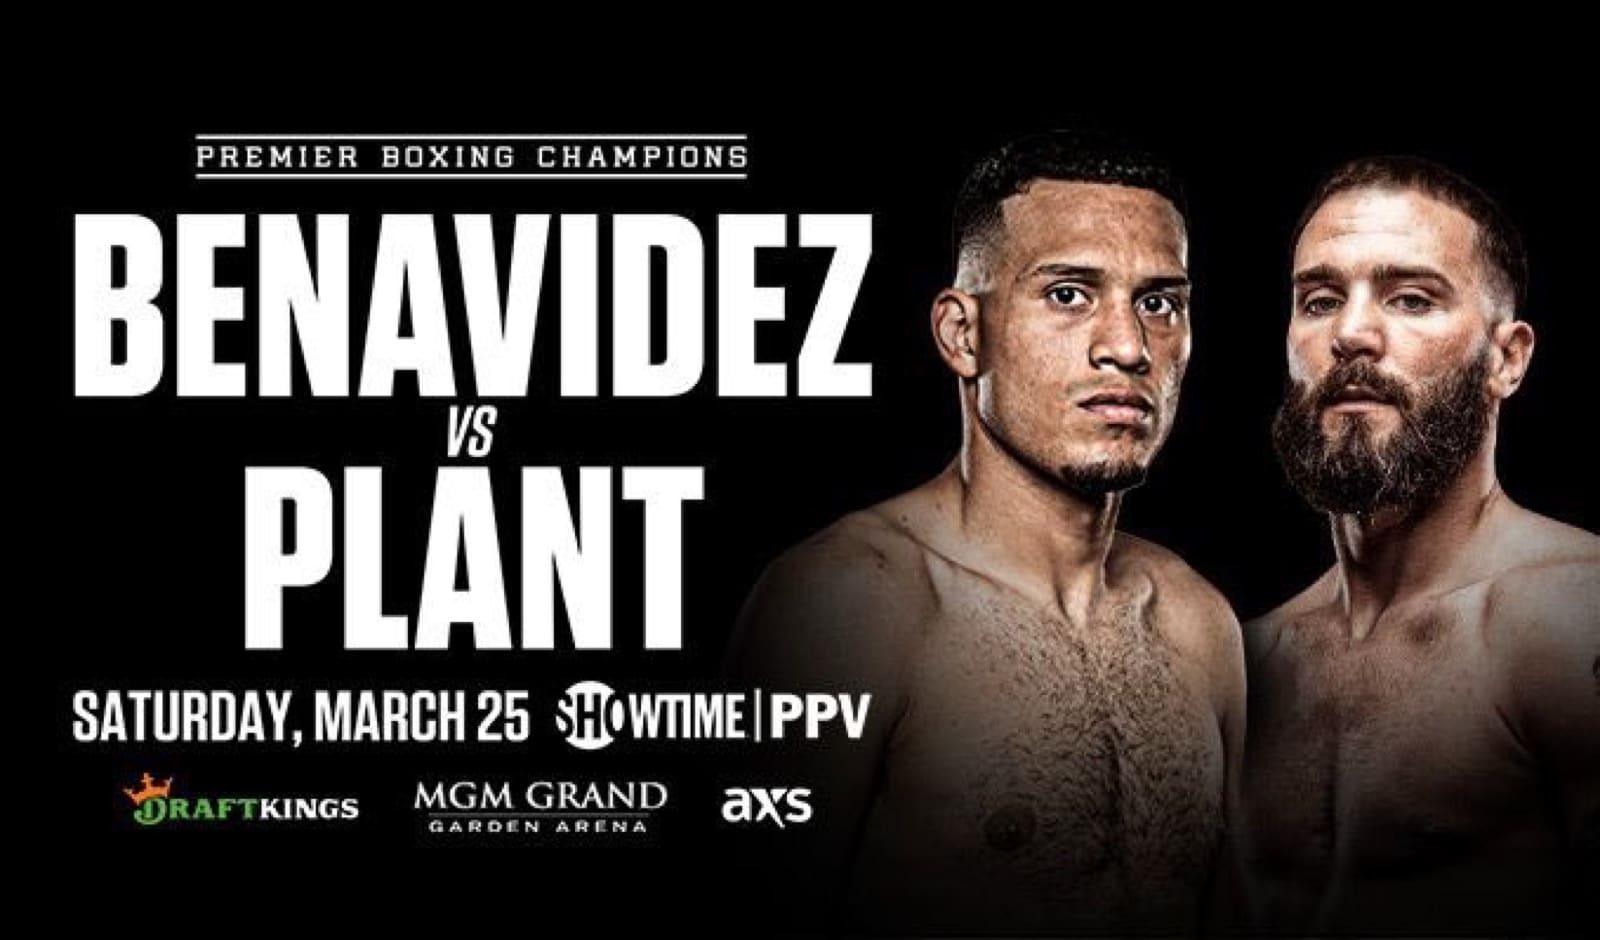 David Benavidez vs. Caleb Plant, Saturday, March 25 at MGM Grand, Las Vegas, United States (Showtime PPV)